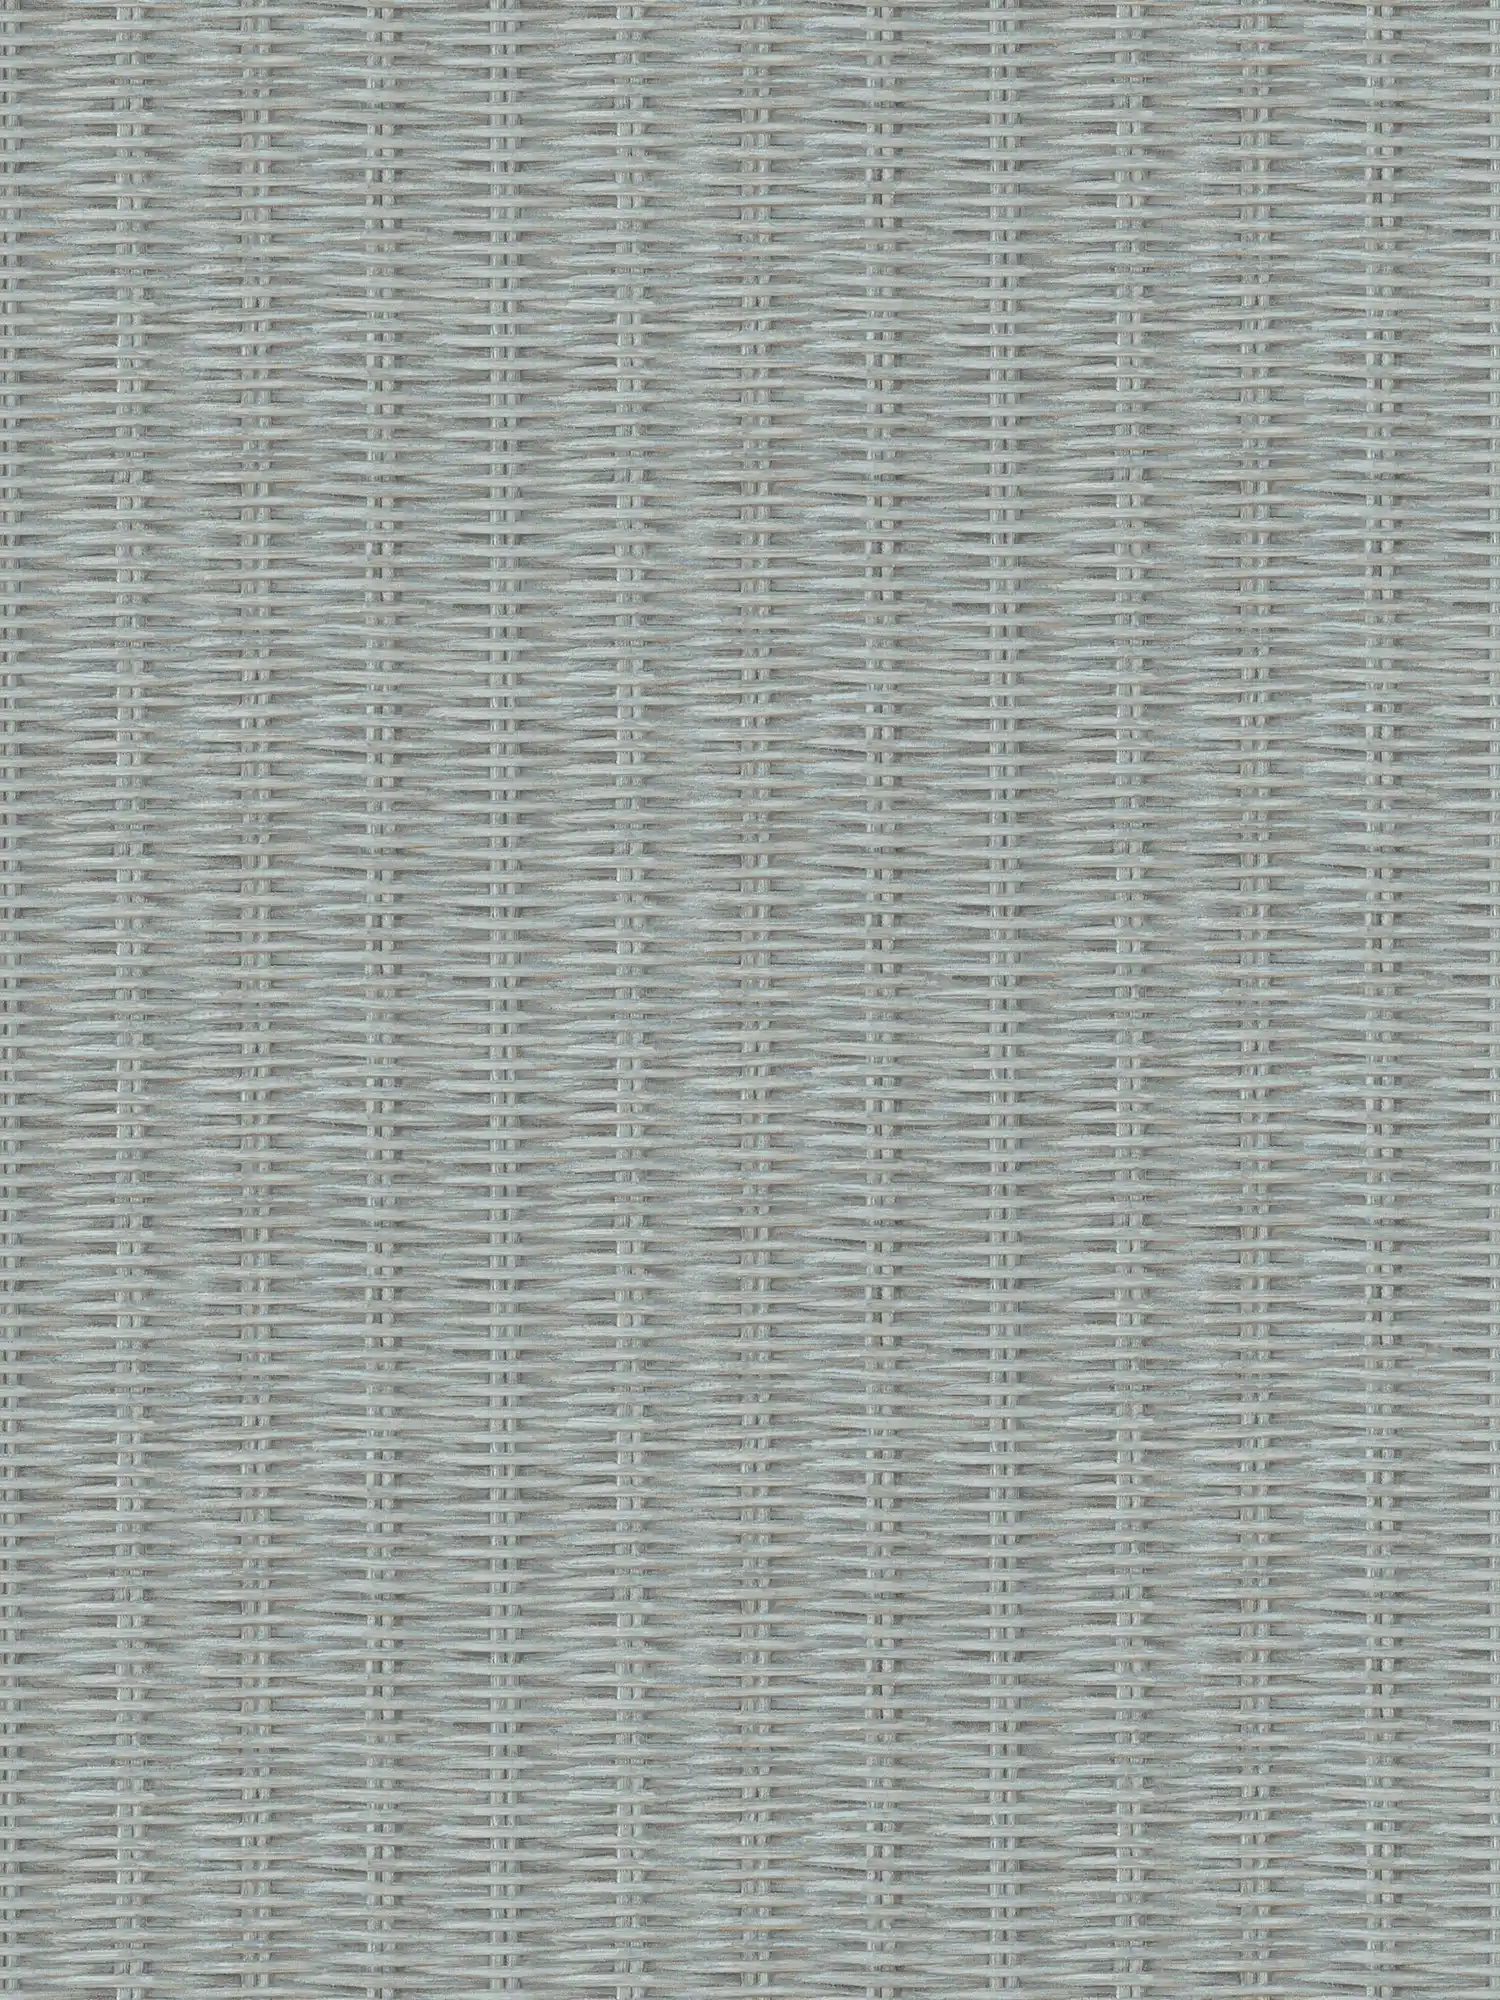 Non-woven wallpaper rattan motif - blue, grey, green
